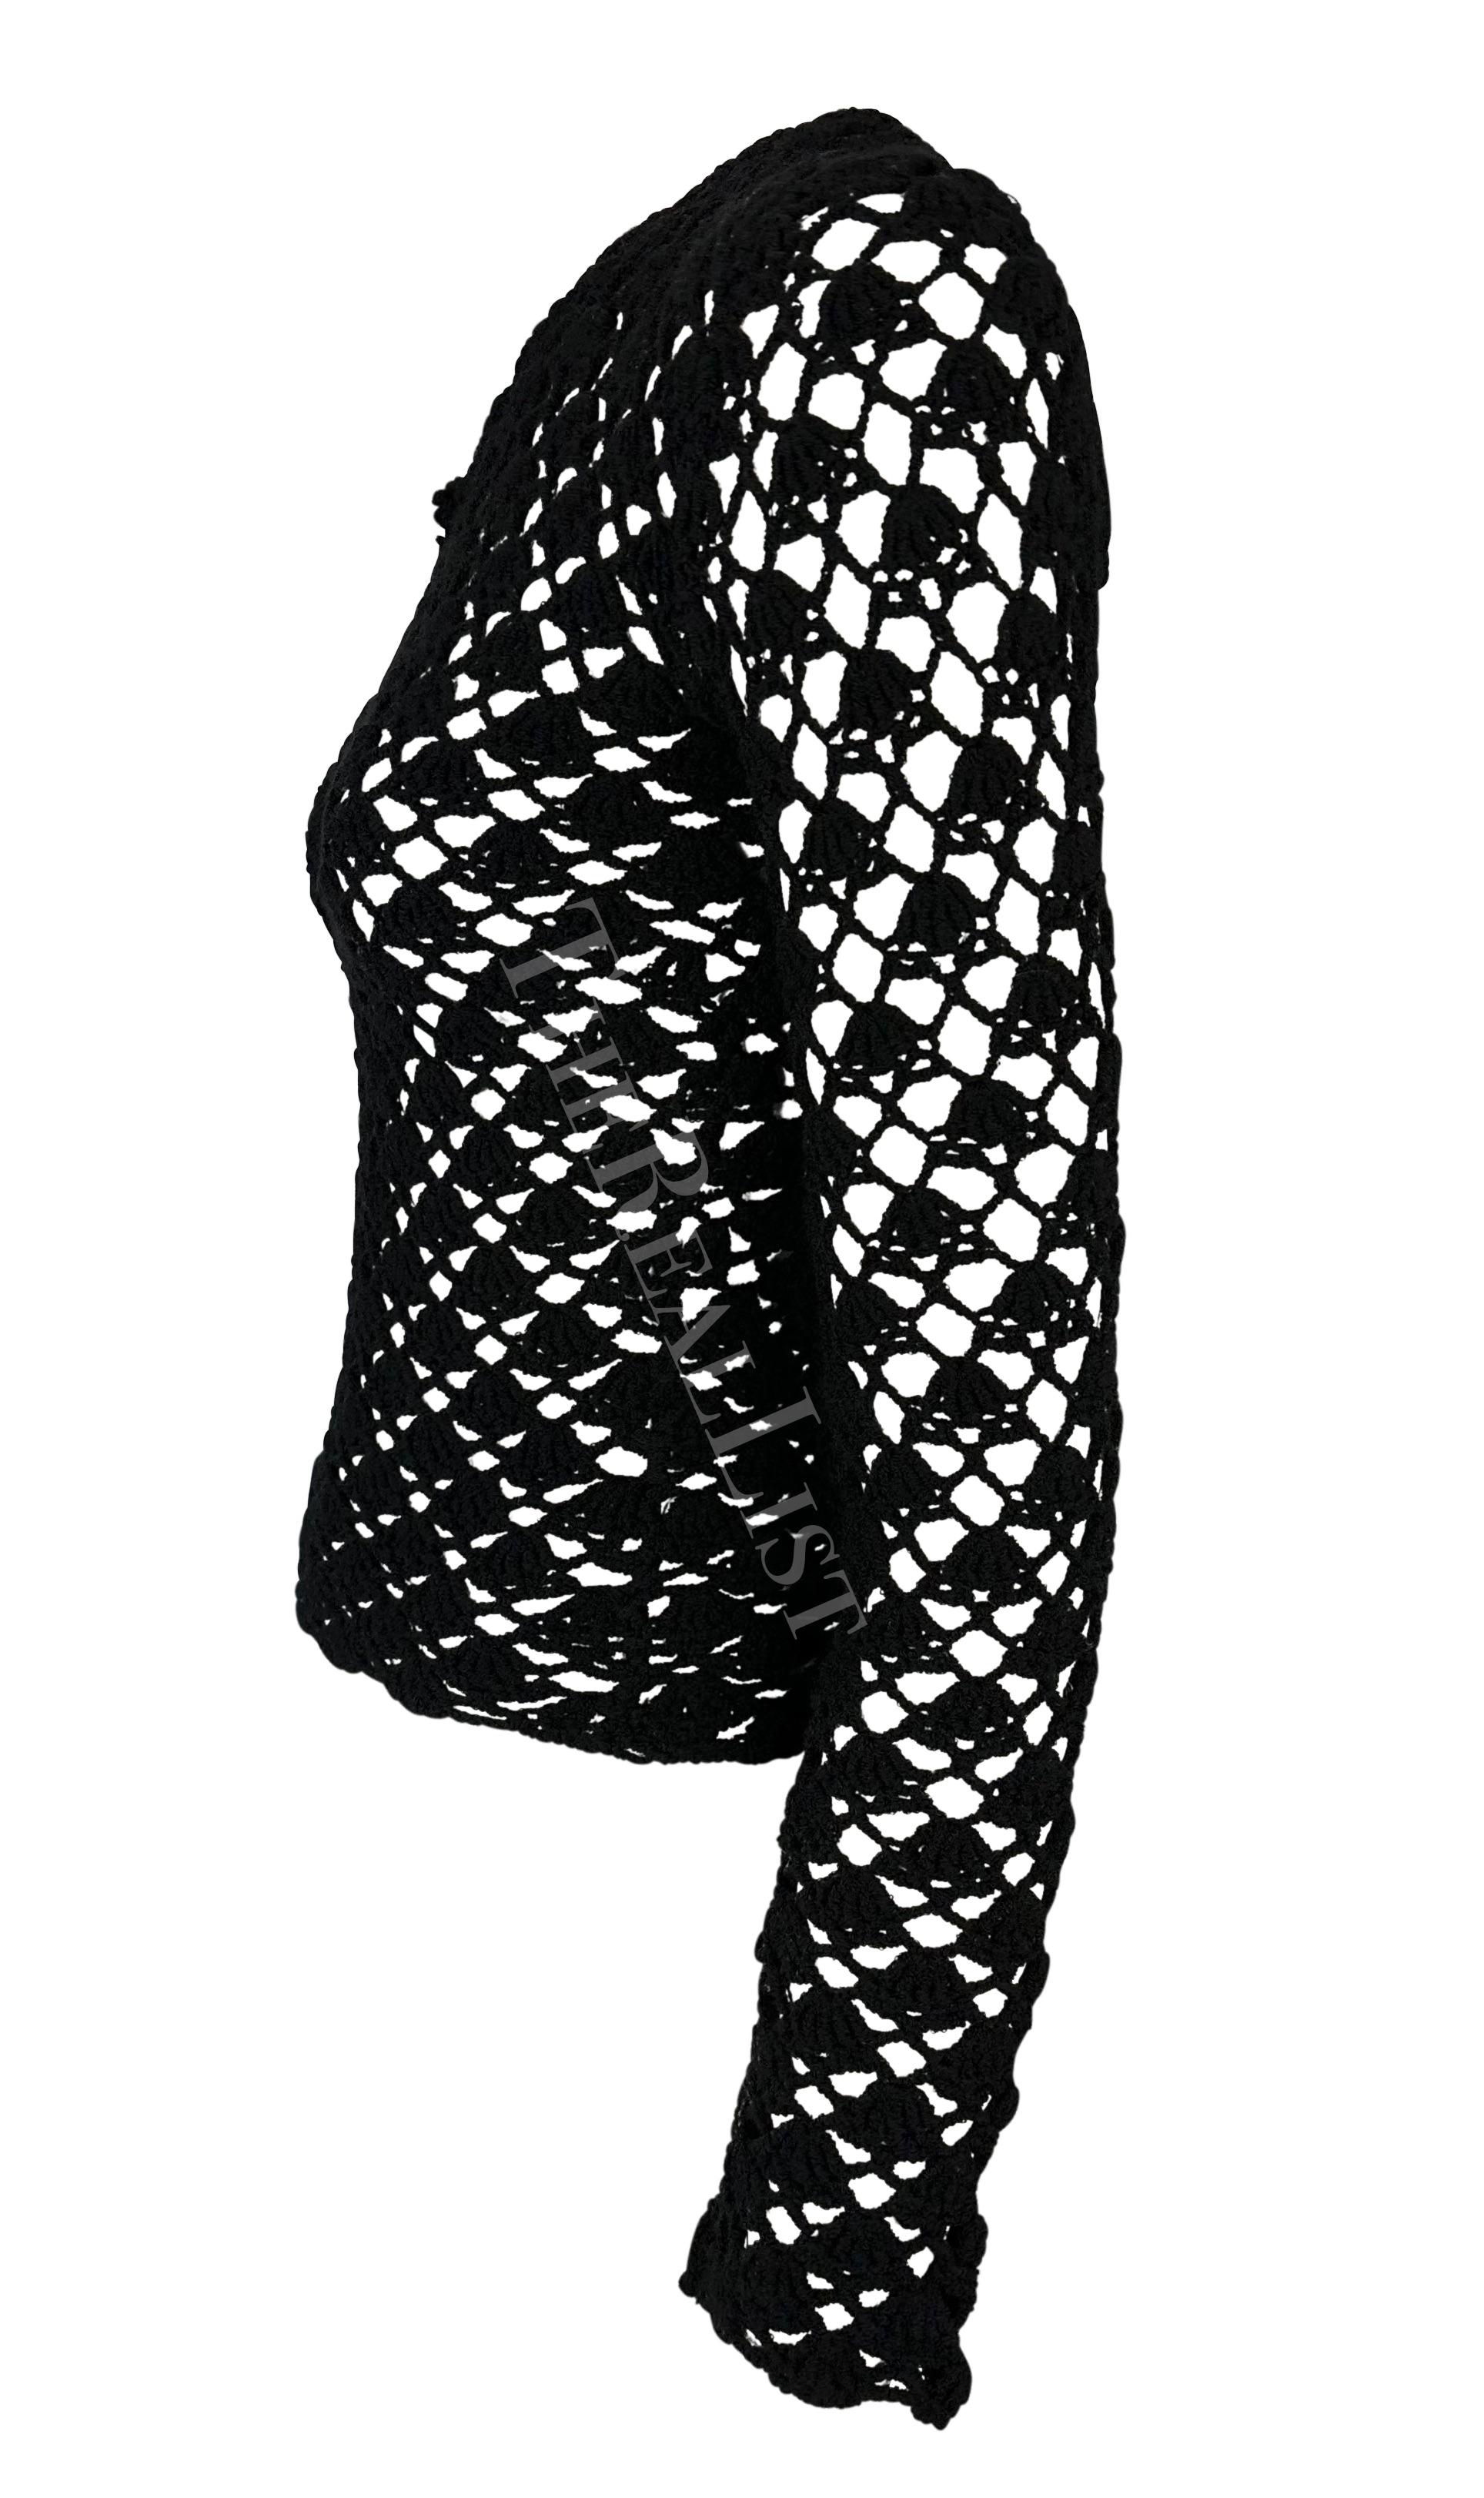 S/S 1997 Dolce & Gabbana Black Crochet Sheer Sweater Top For Sale 1